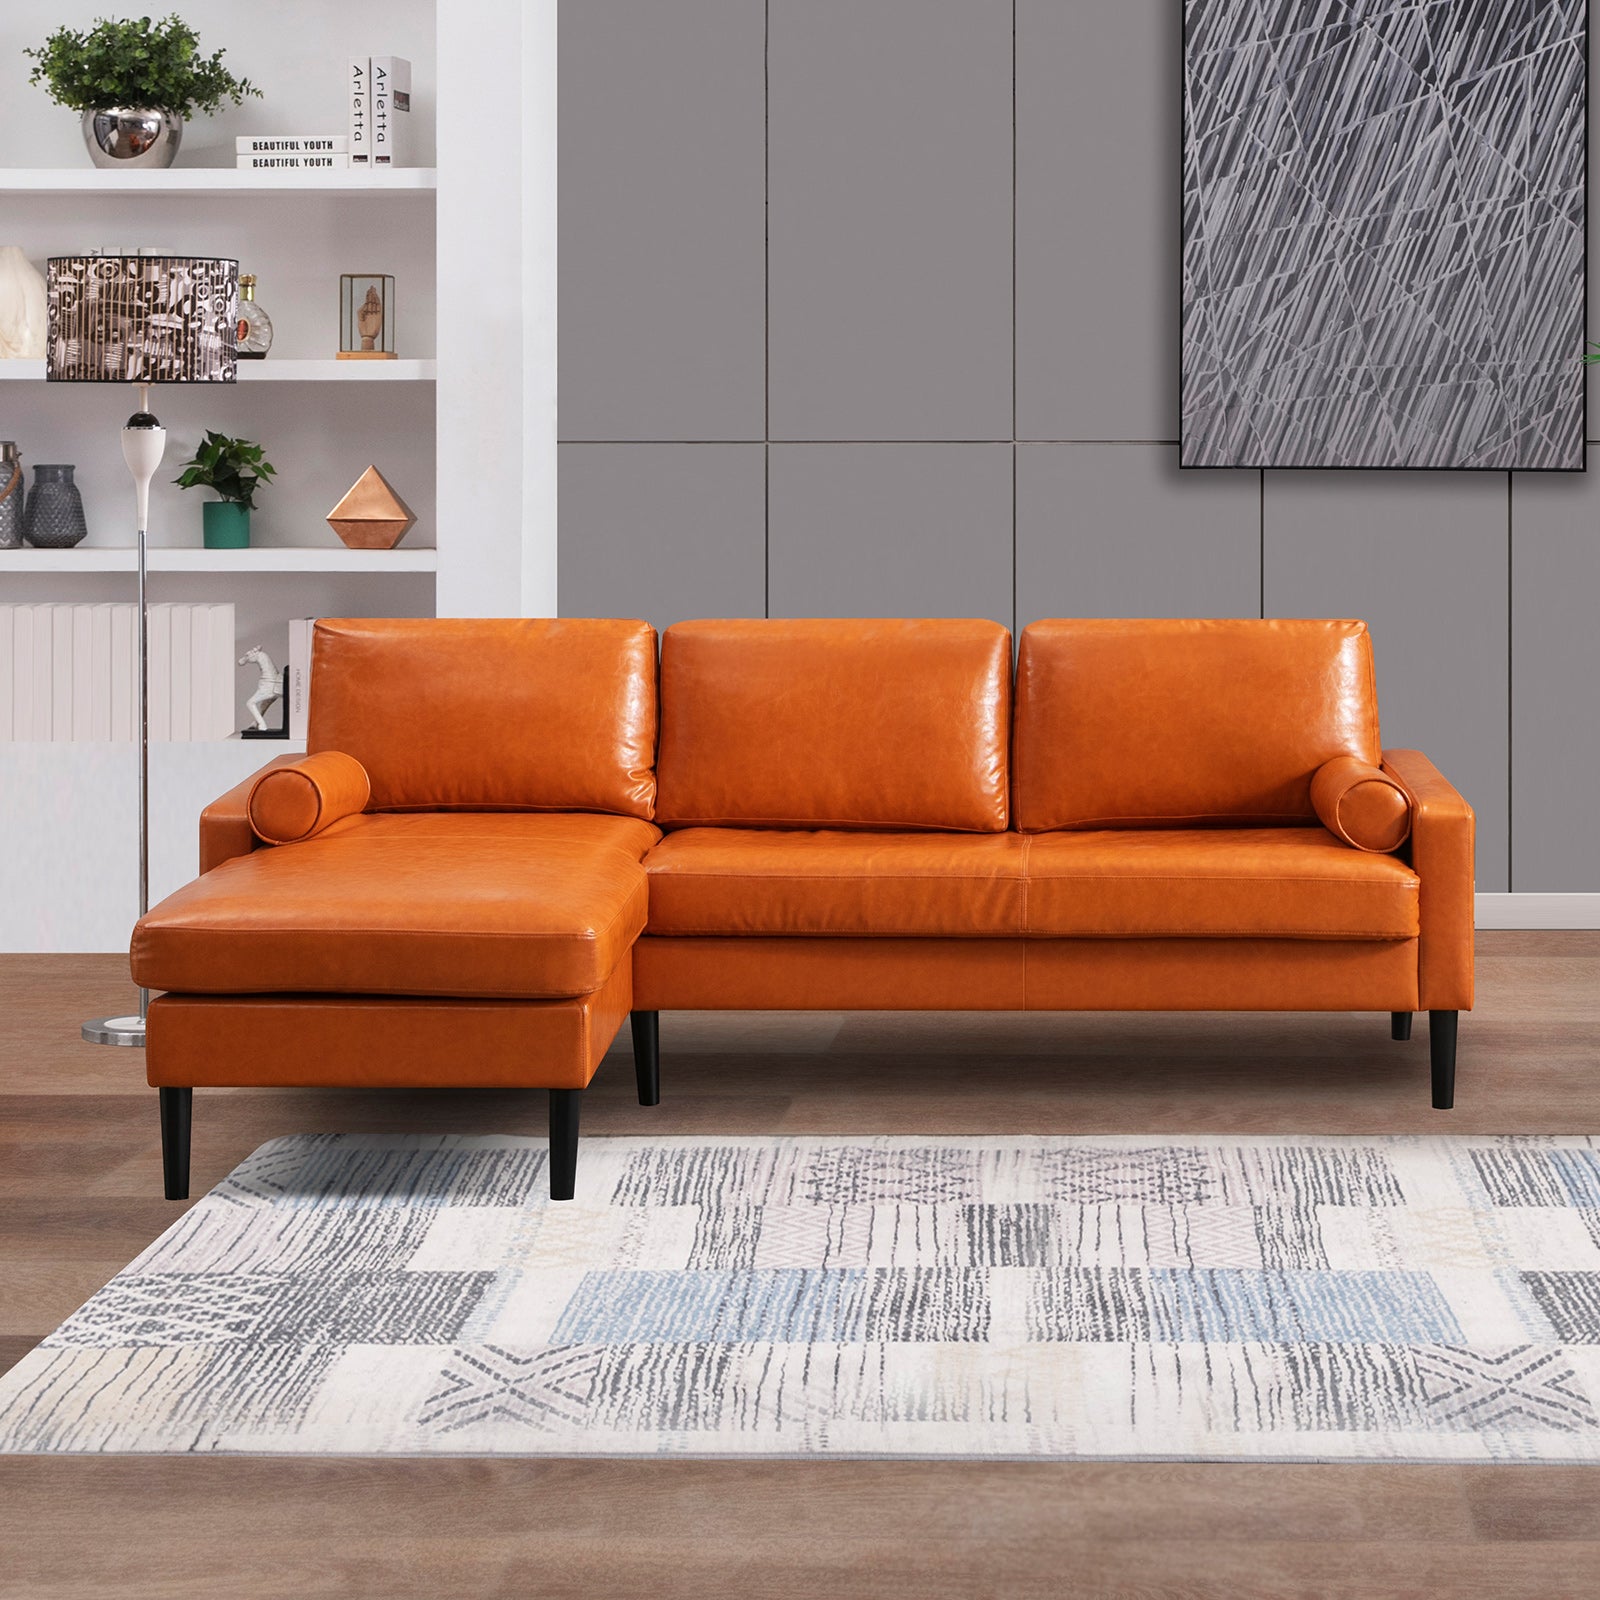 Mjkone Faux Leather Convertible Sectional Sofa Set